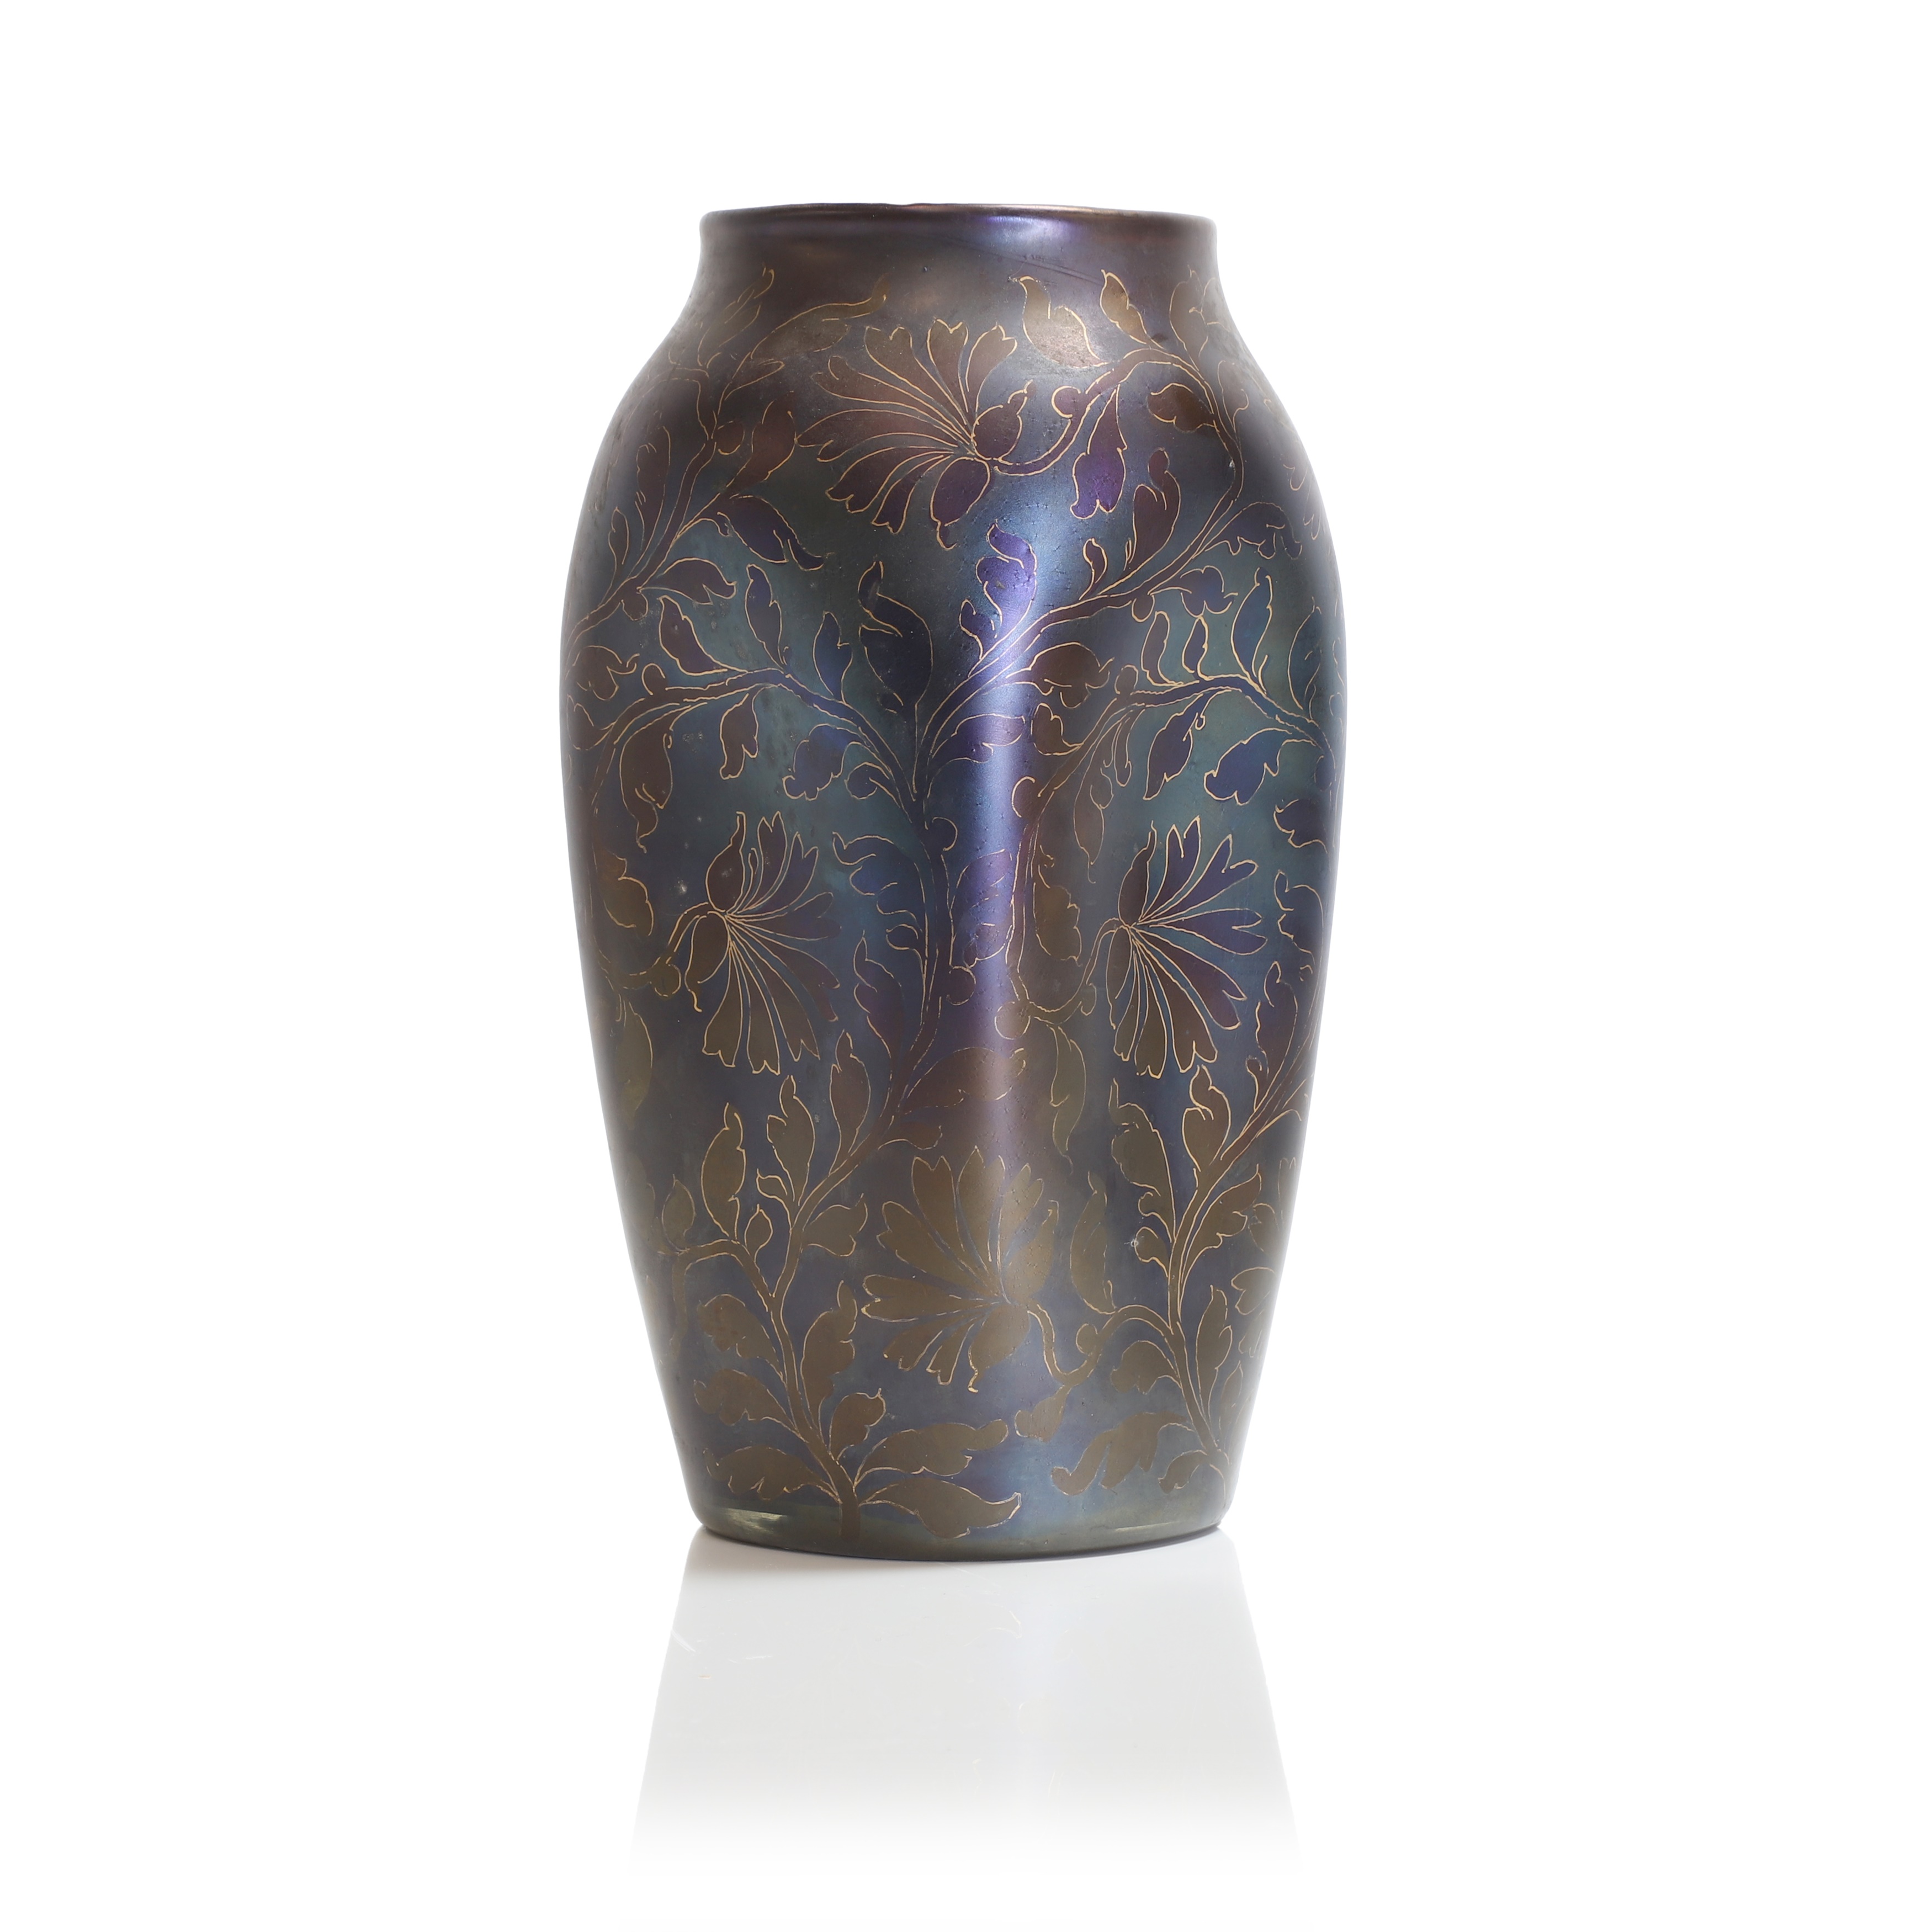 A Loetz 'Rubin Matte Iris' glass vase (£400-600)